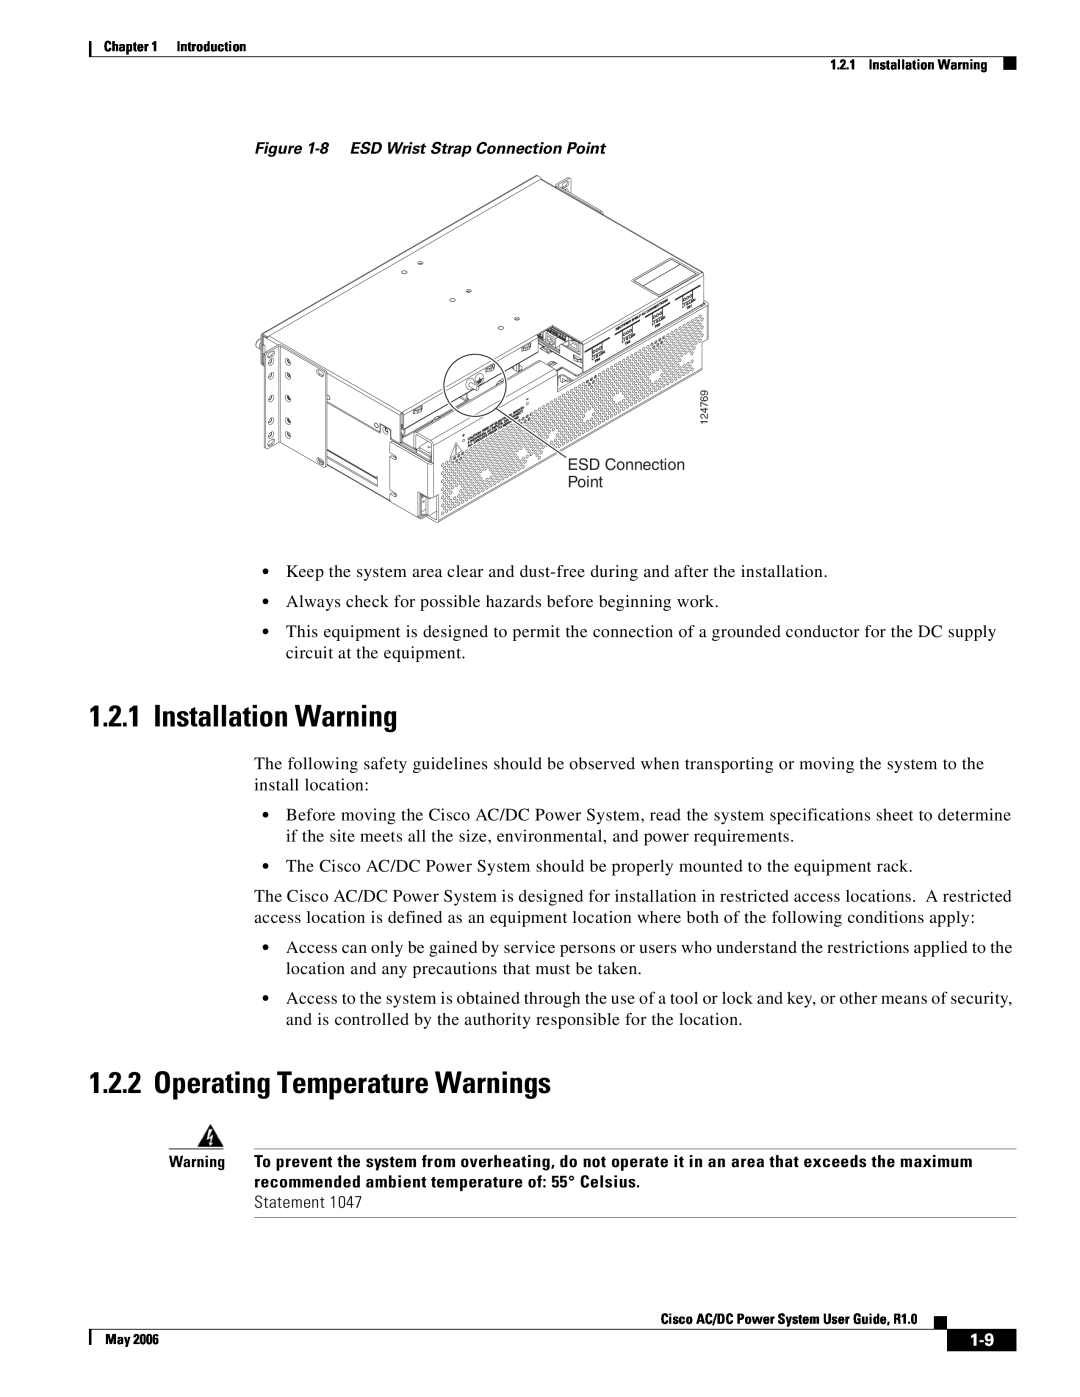 Cisco Systems 124778, 124792, 159330 manual Installation Warning, Operating Temperature Warnings 